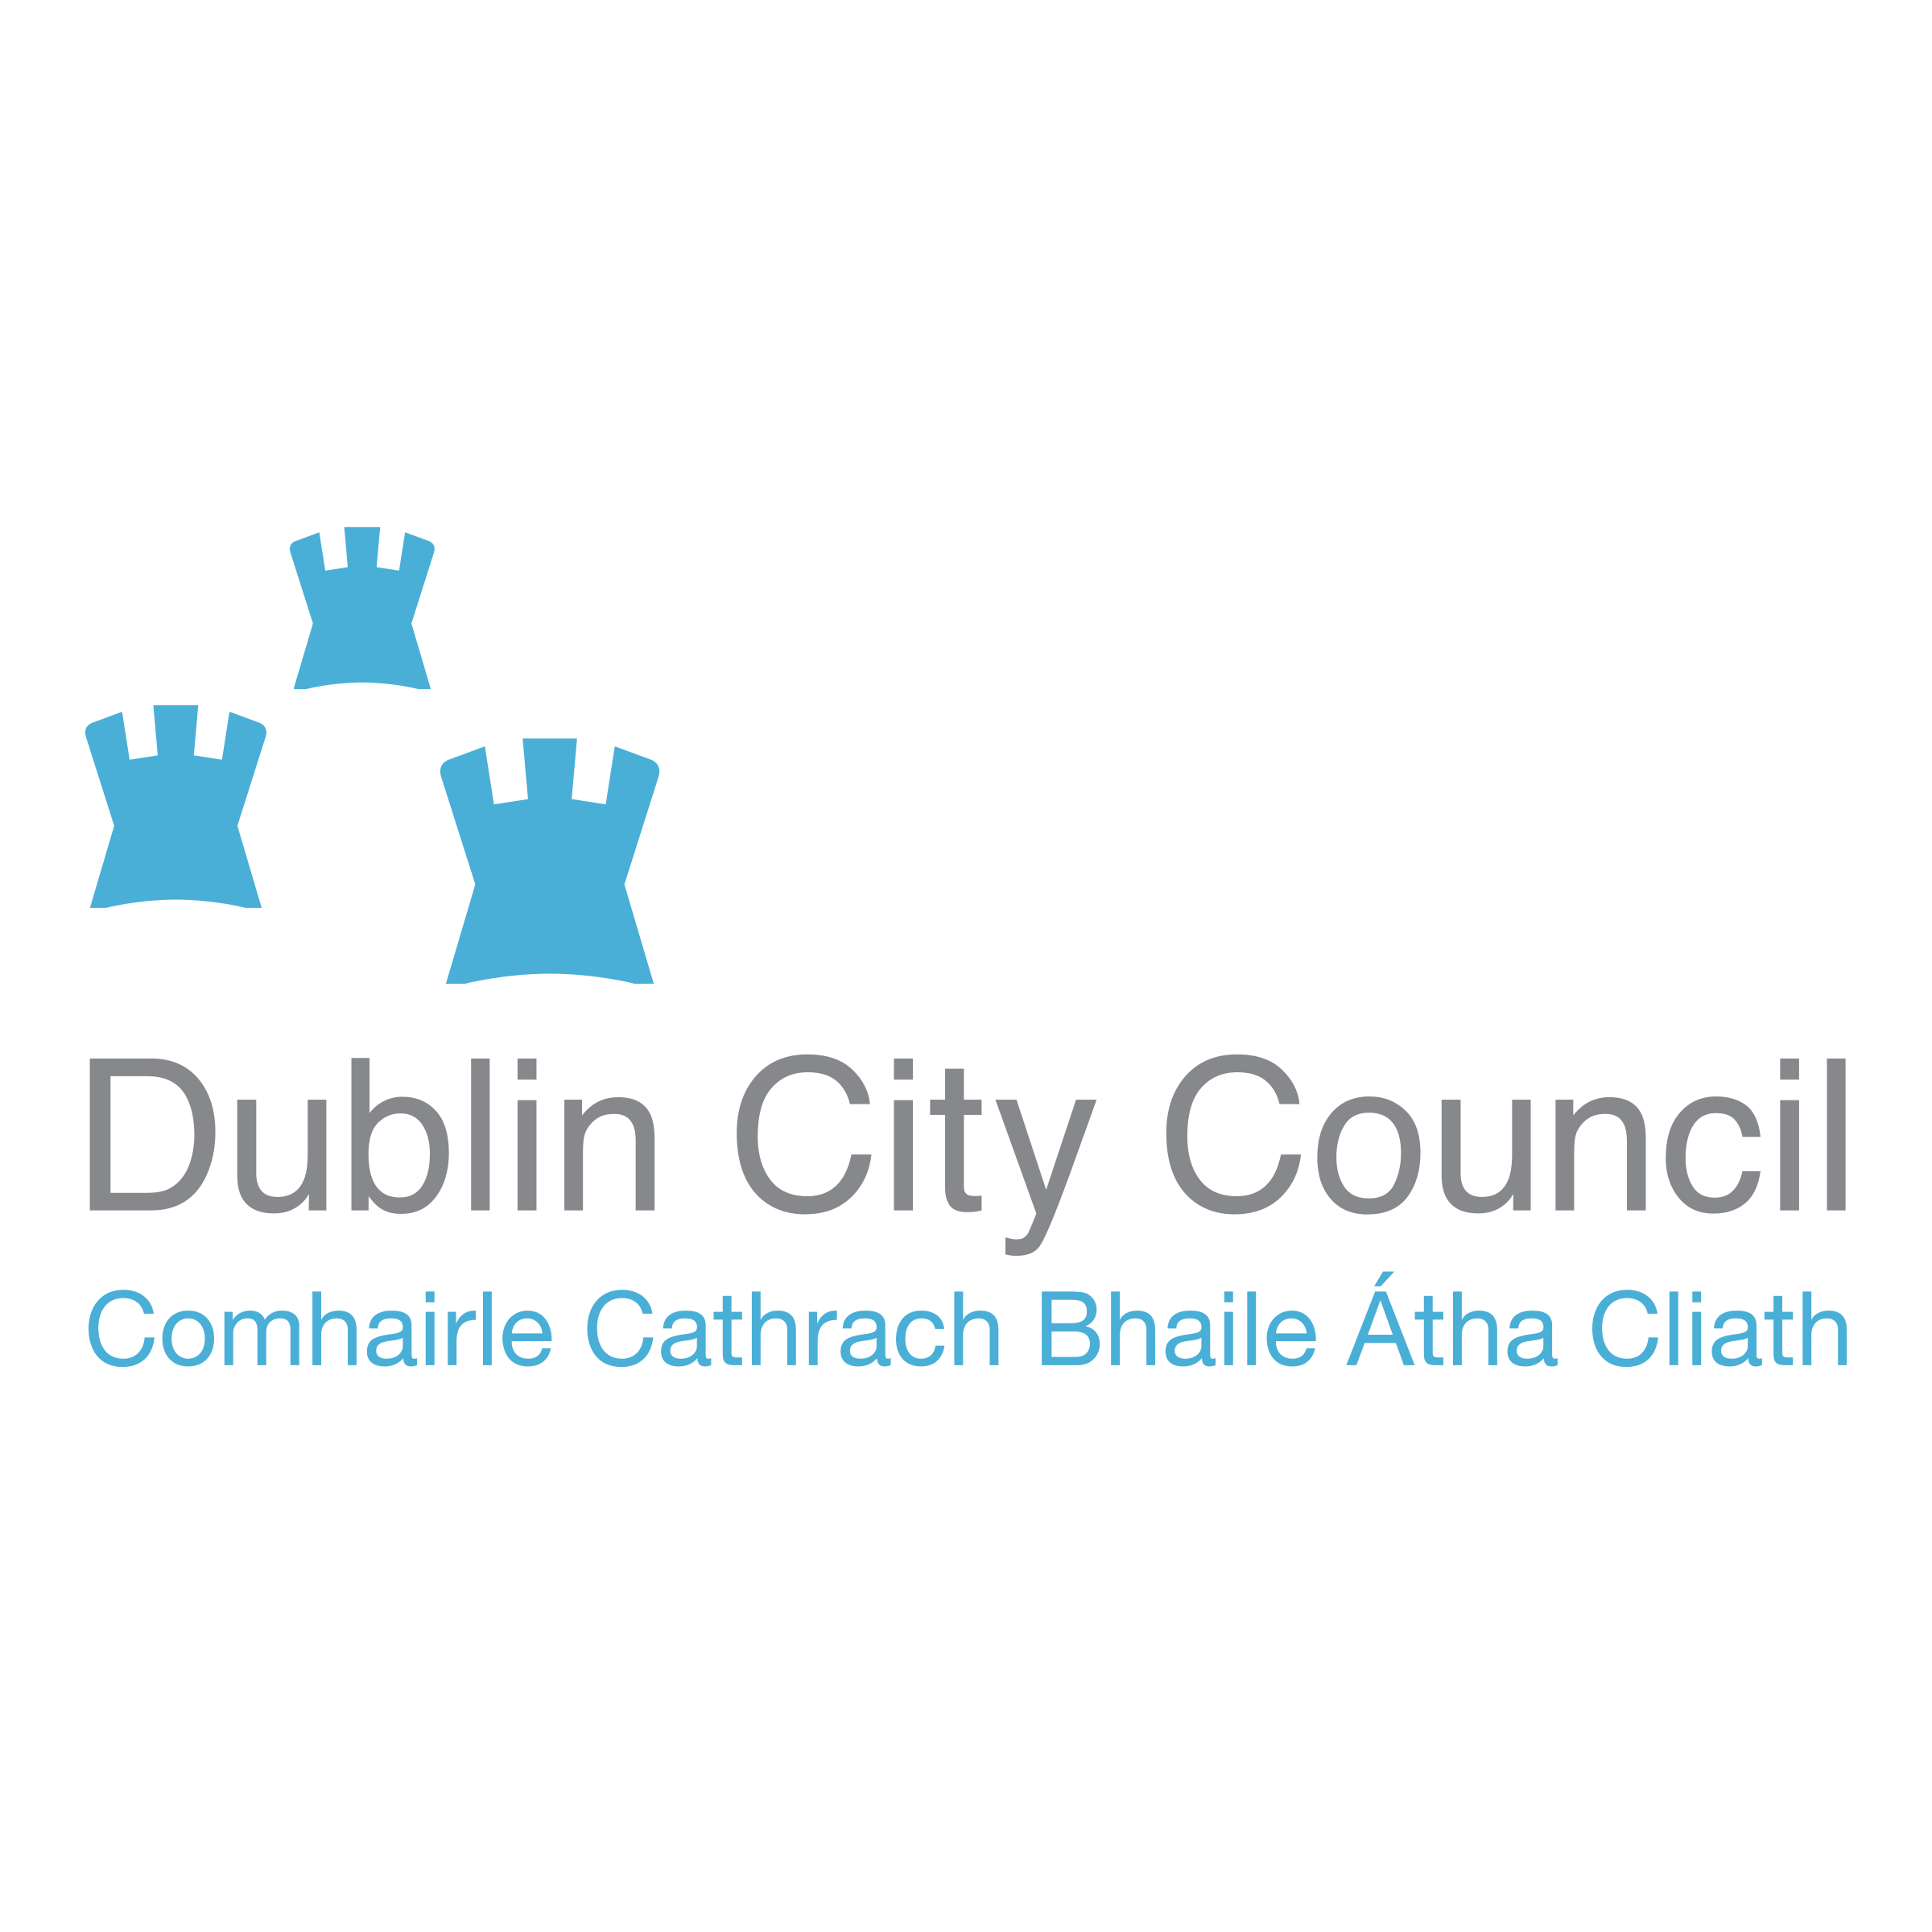  Dublin City Council